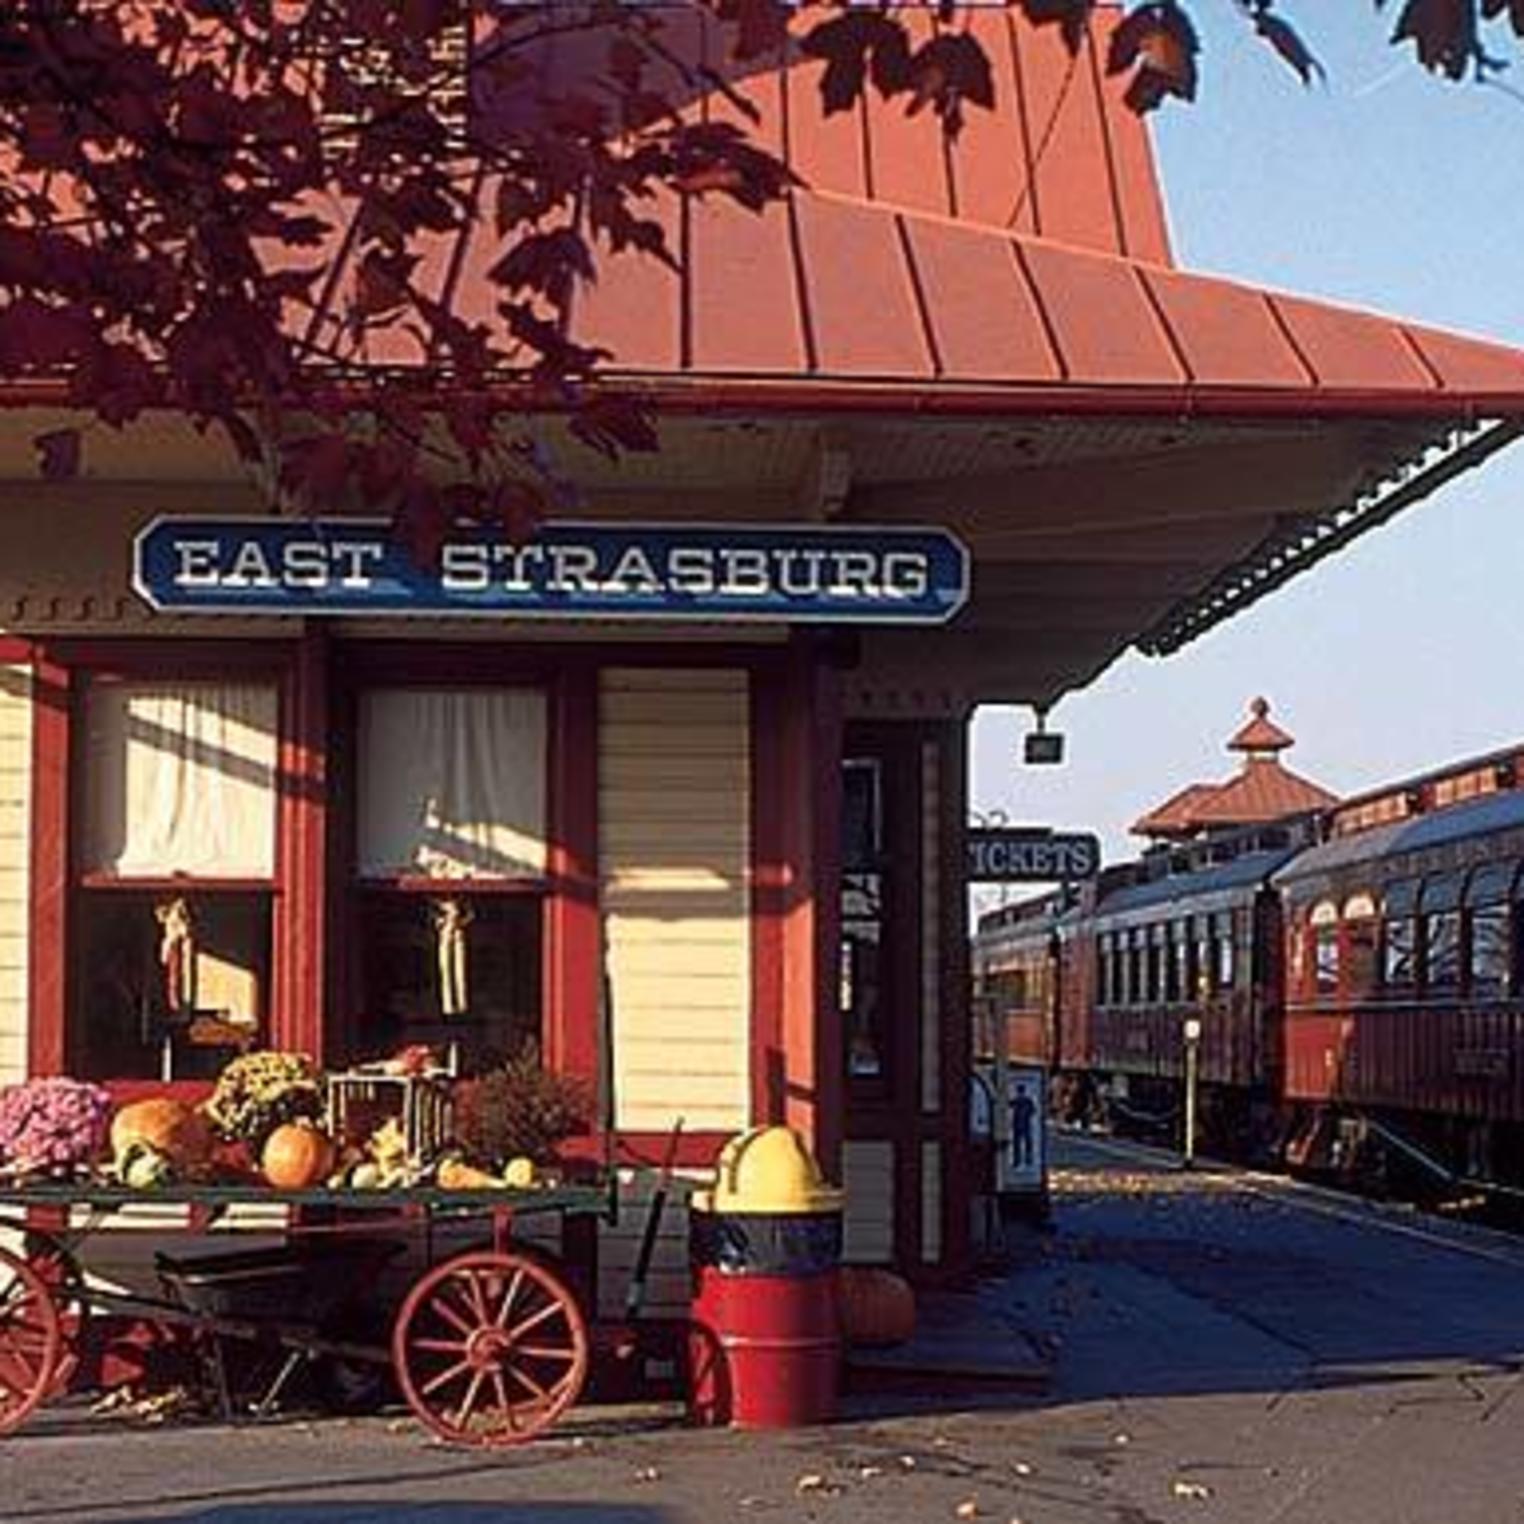 The Strasburg Railroad